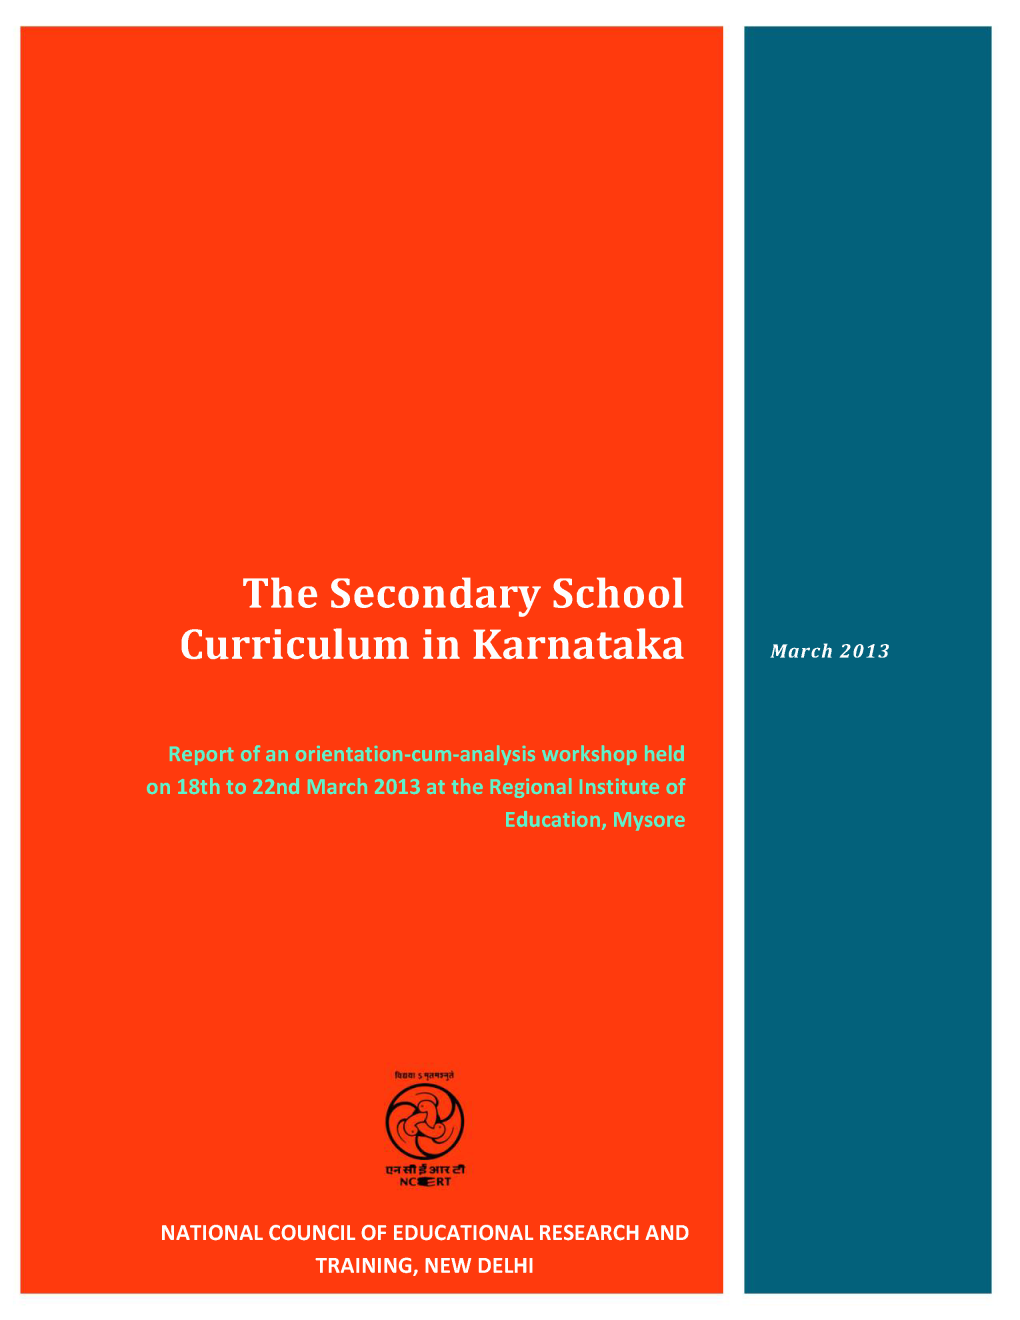 The Secondary School Curriculum in Karnataka.Pdf